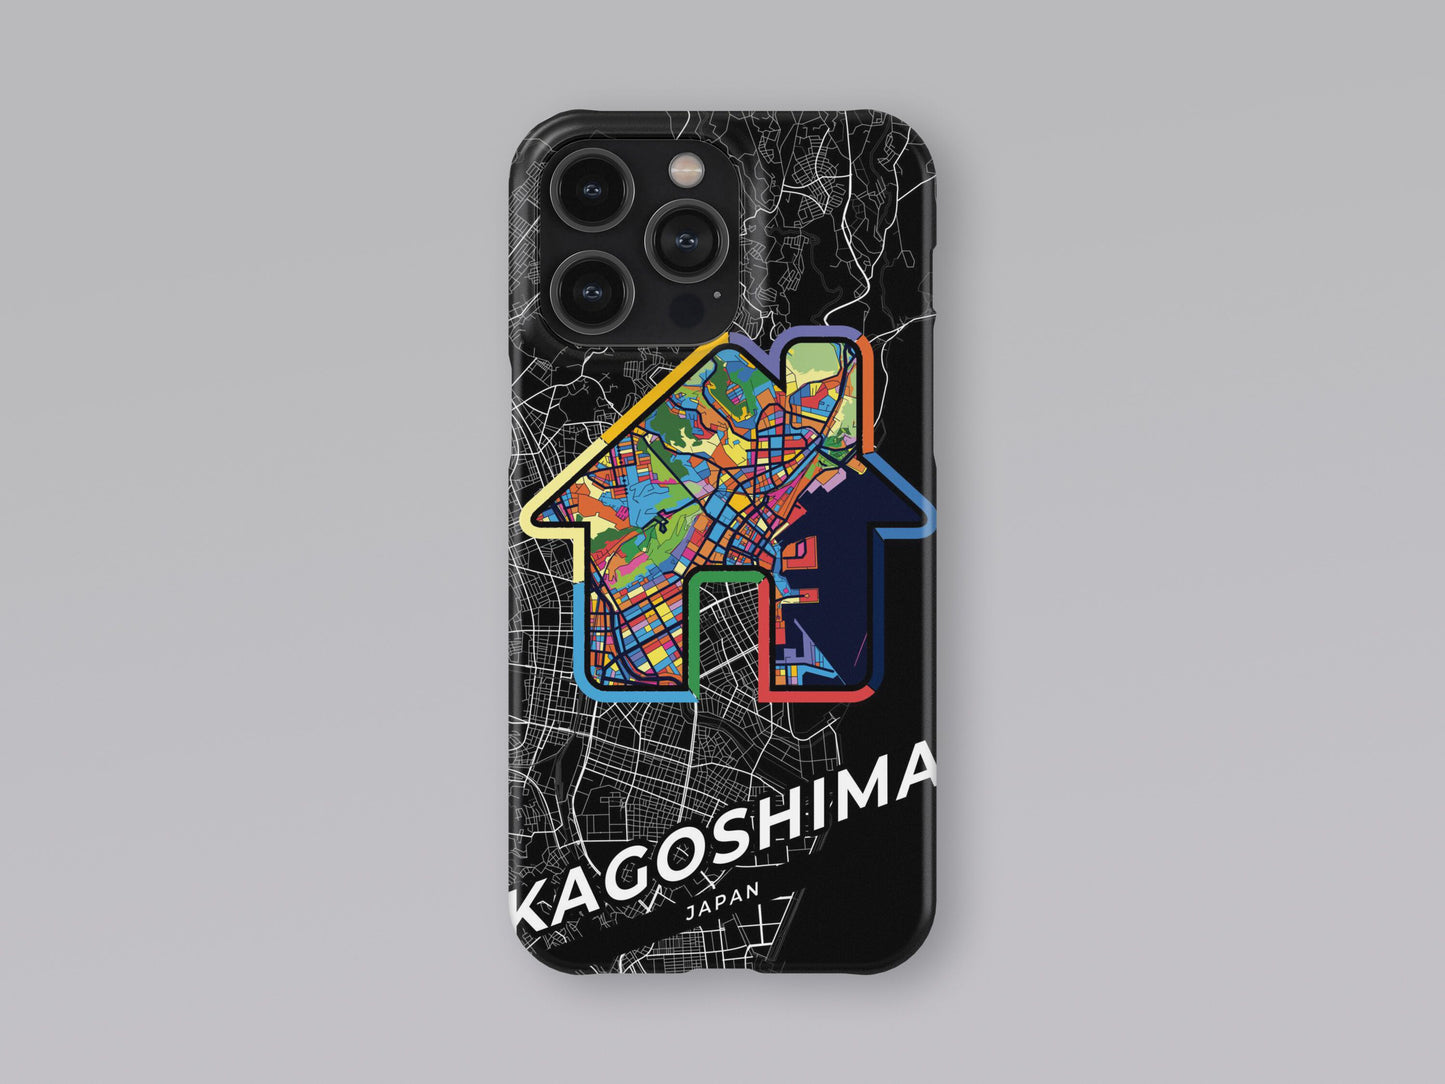 Kagoshima Japan slim phone case with colorful icon. Birthday, wedding or housewarming gift. Couple match cases. 3